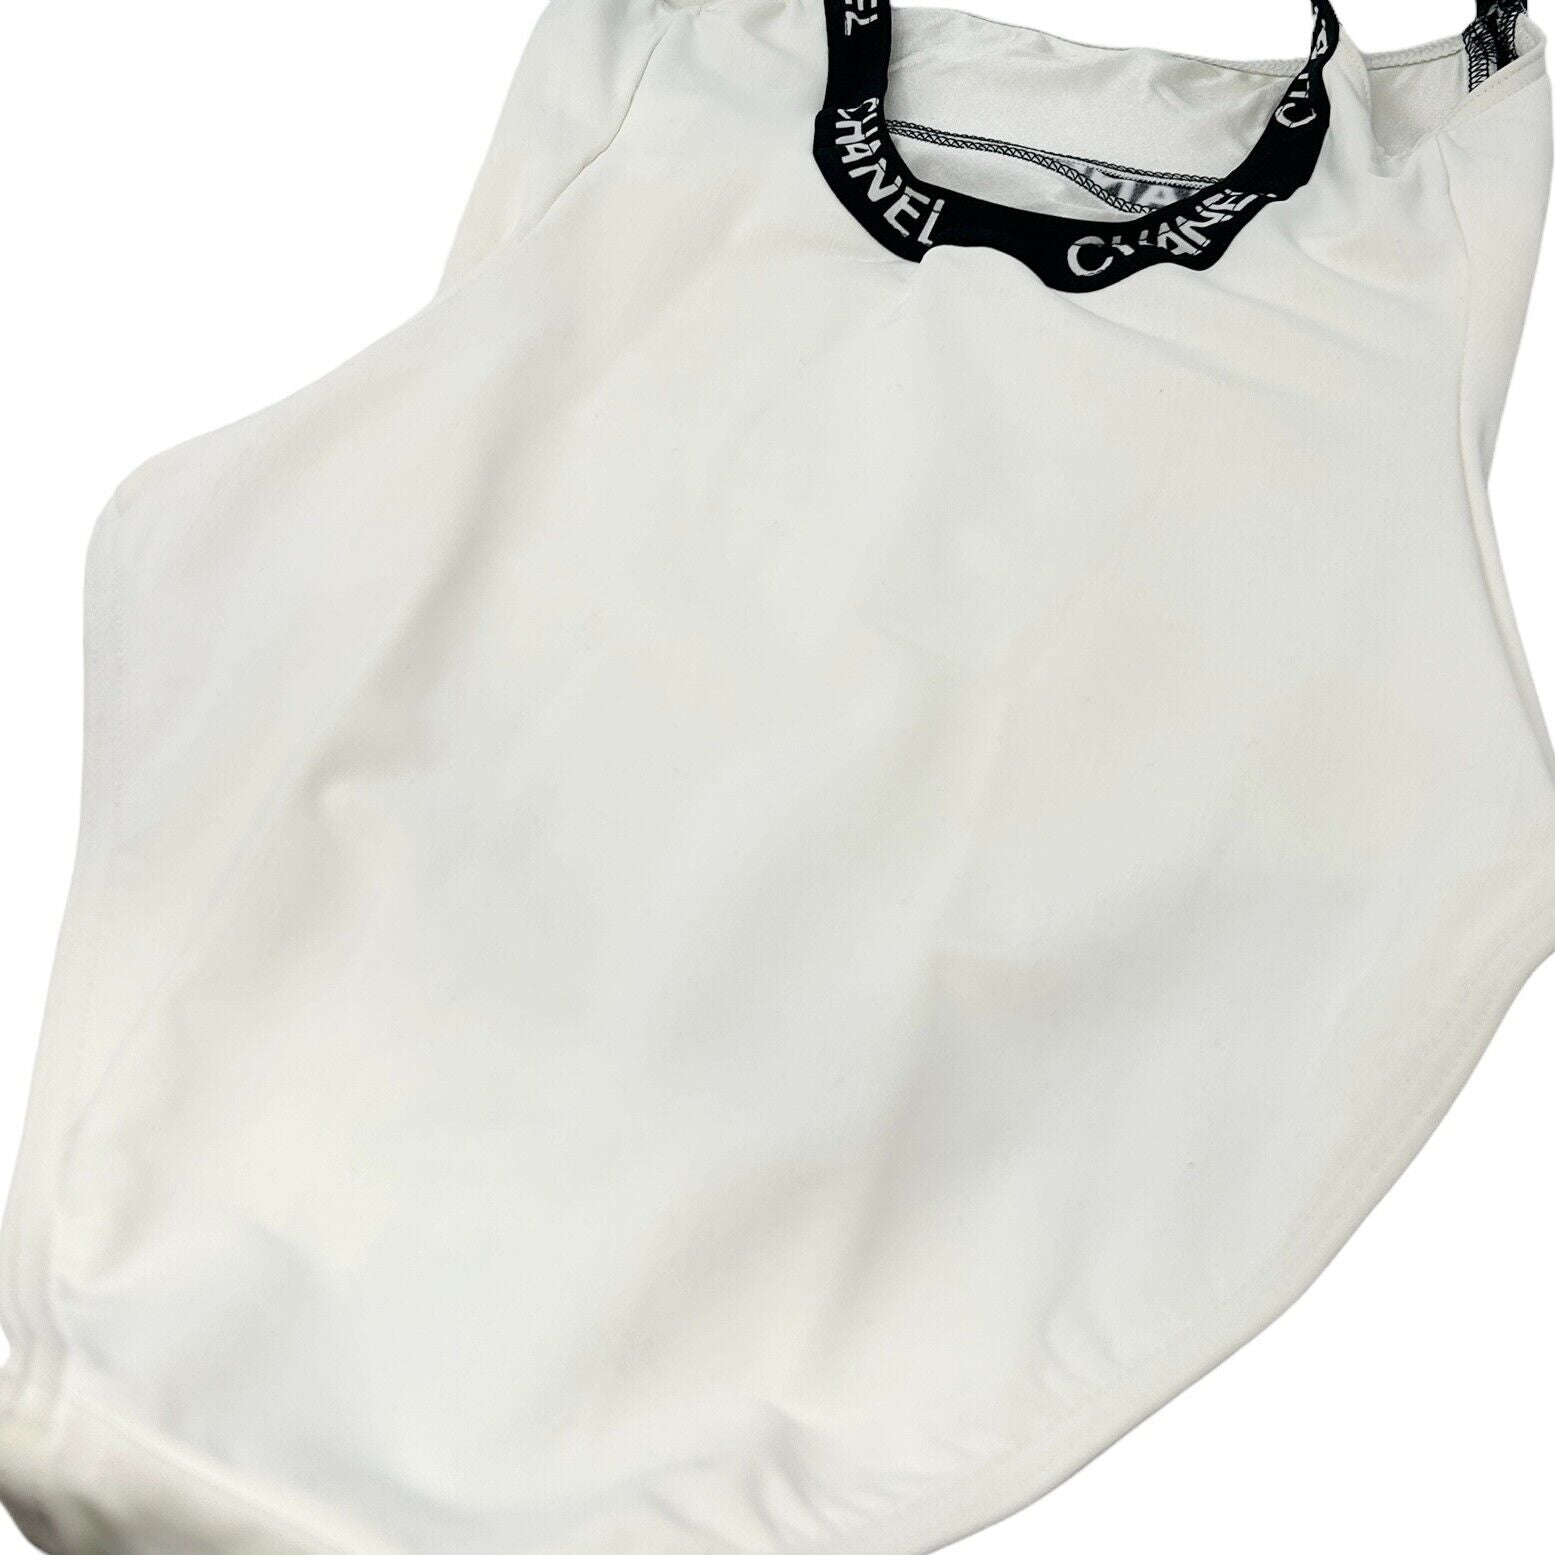 CHANEL Vintage Logo Swimsuits #38 Swimwear One-piece White Black Nylon Rank B